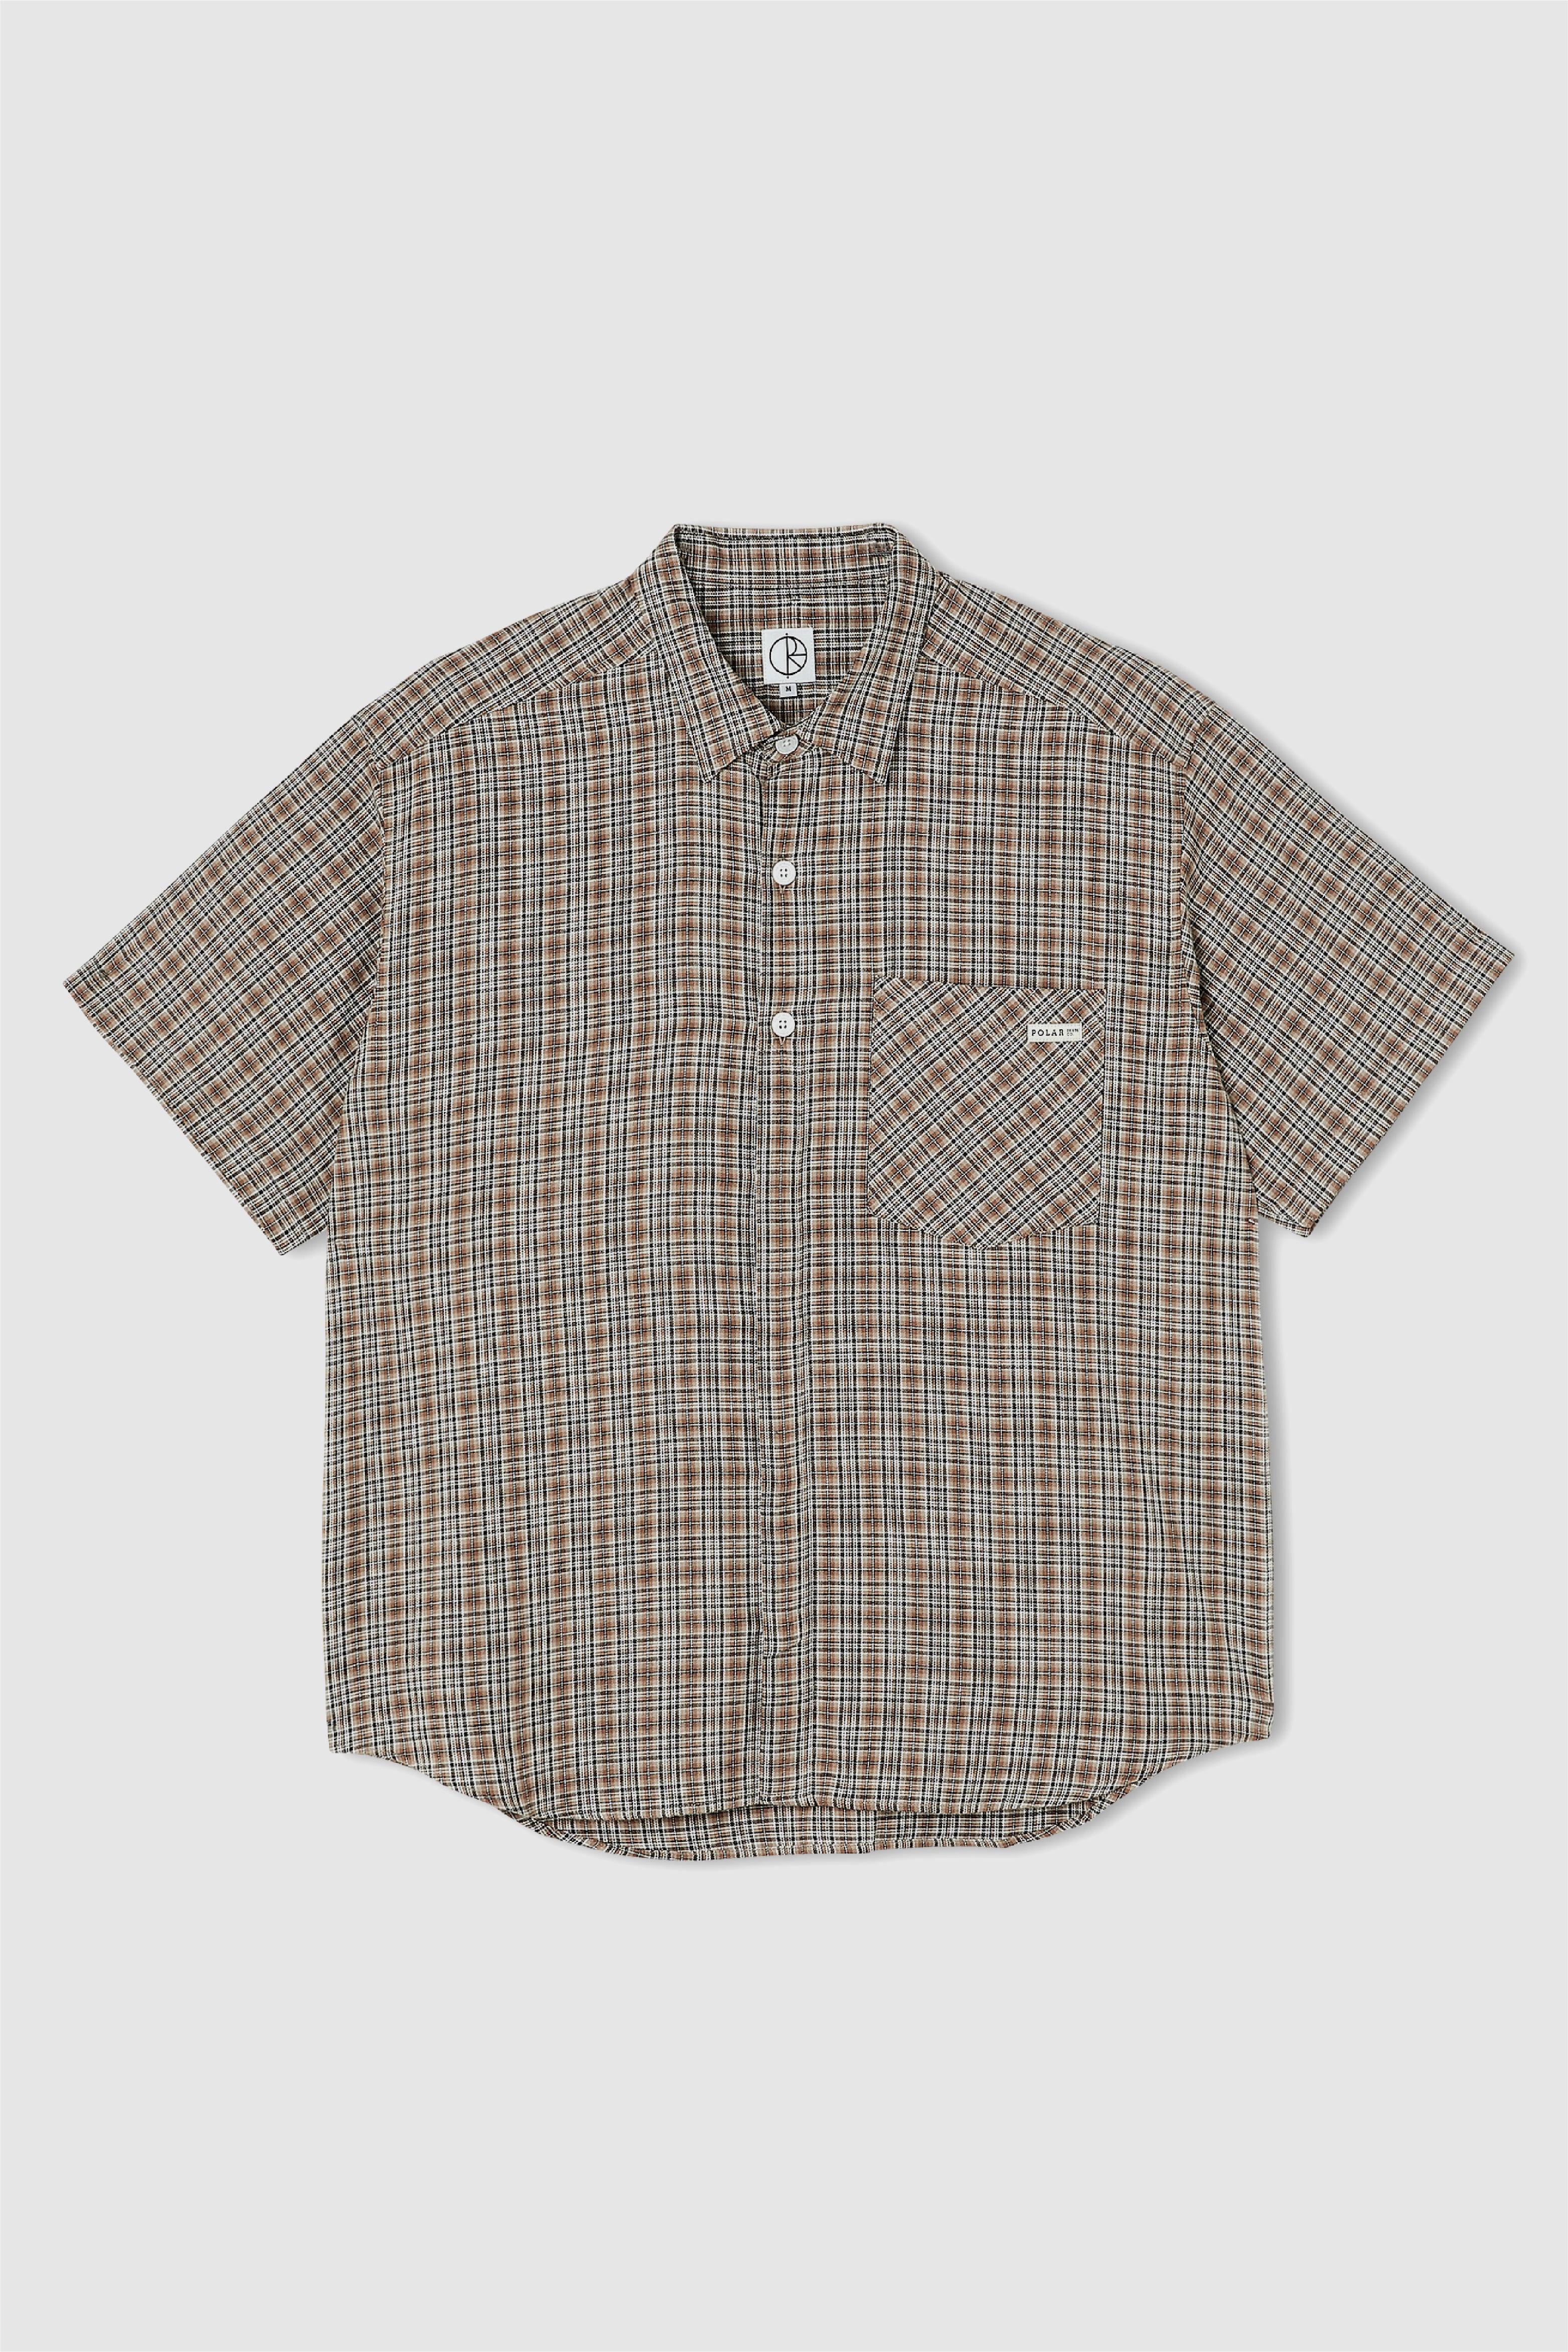 Selectshop FRAME - POLAR SKATE CO. Mitchell Flannel Shirt Shirts Dubai